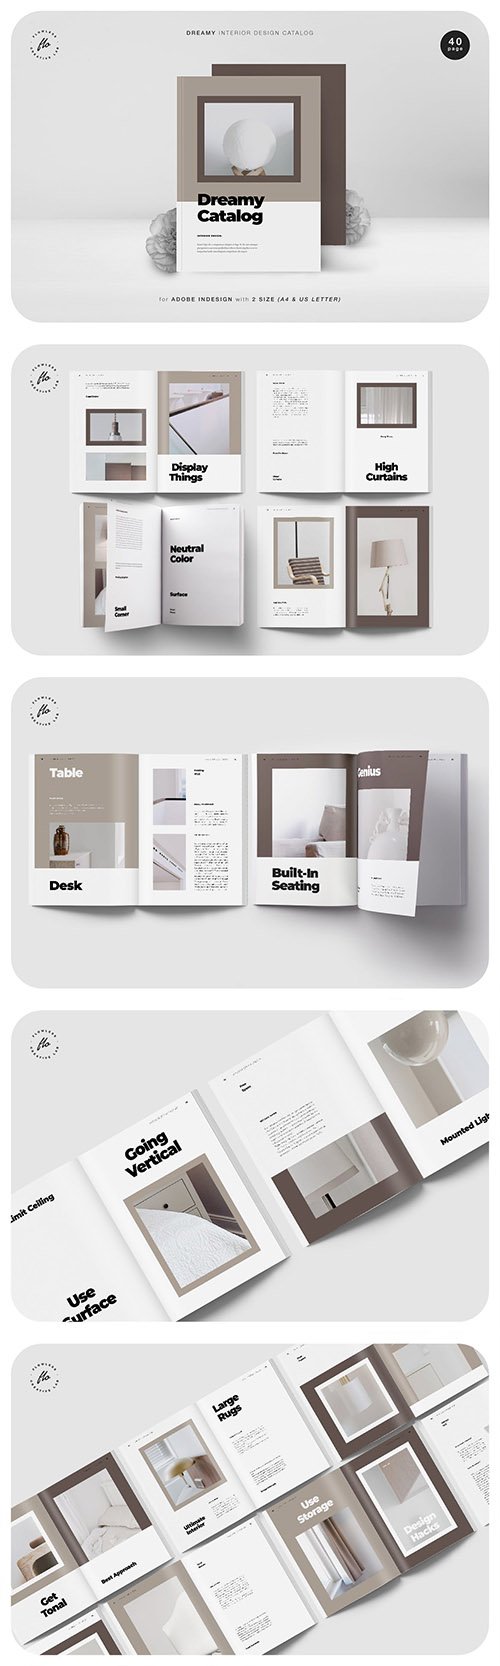 Dreamy Interor Design Catalog